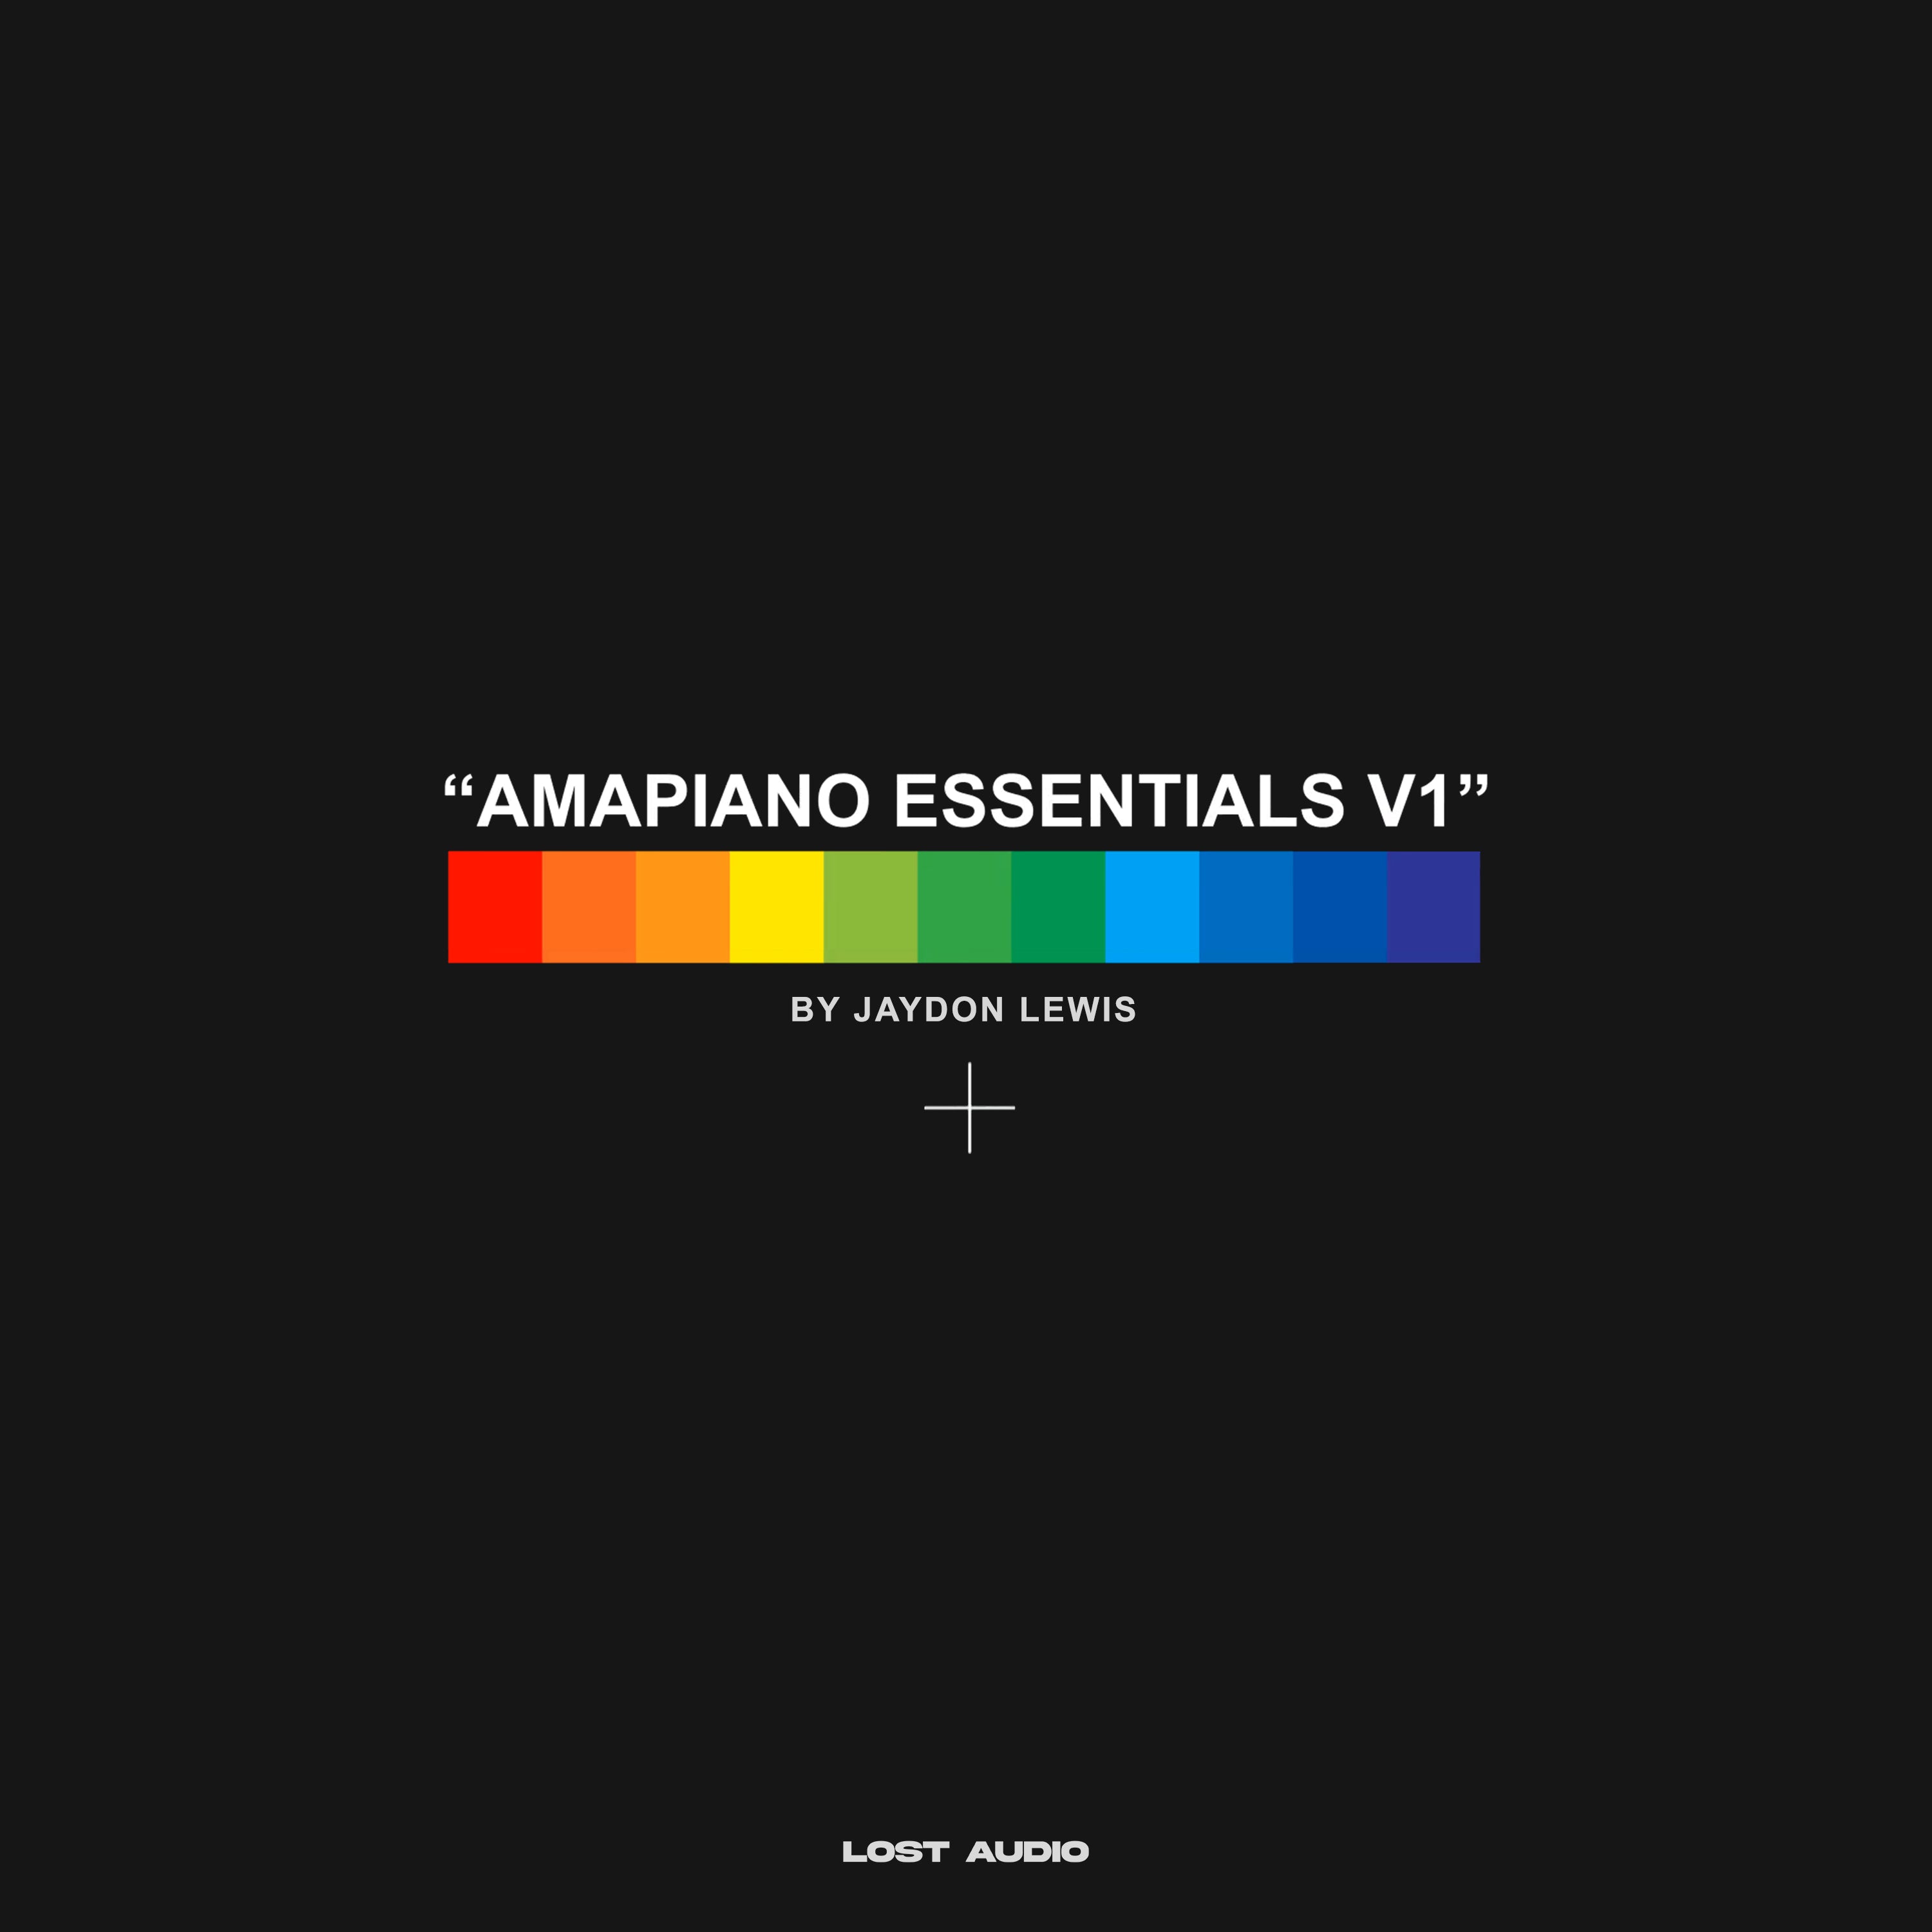 Amapiano Essentials V1